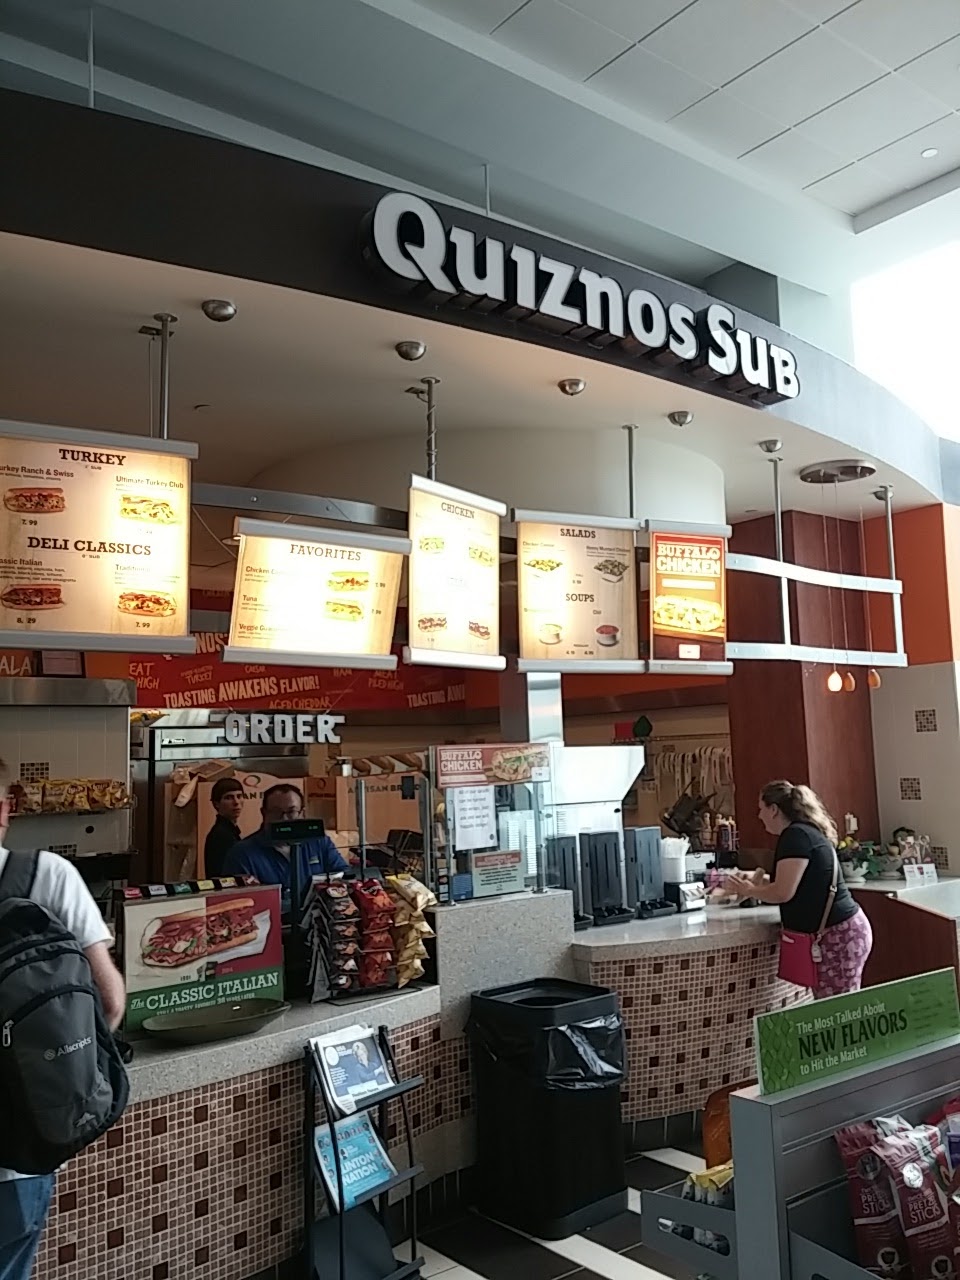 Quiznos-TEMPORARILY CLOSED PLEASE CHECK BACK